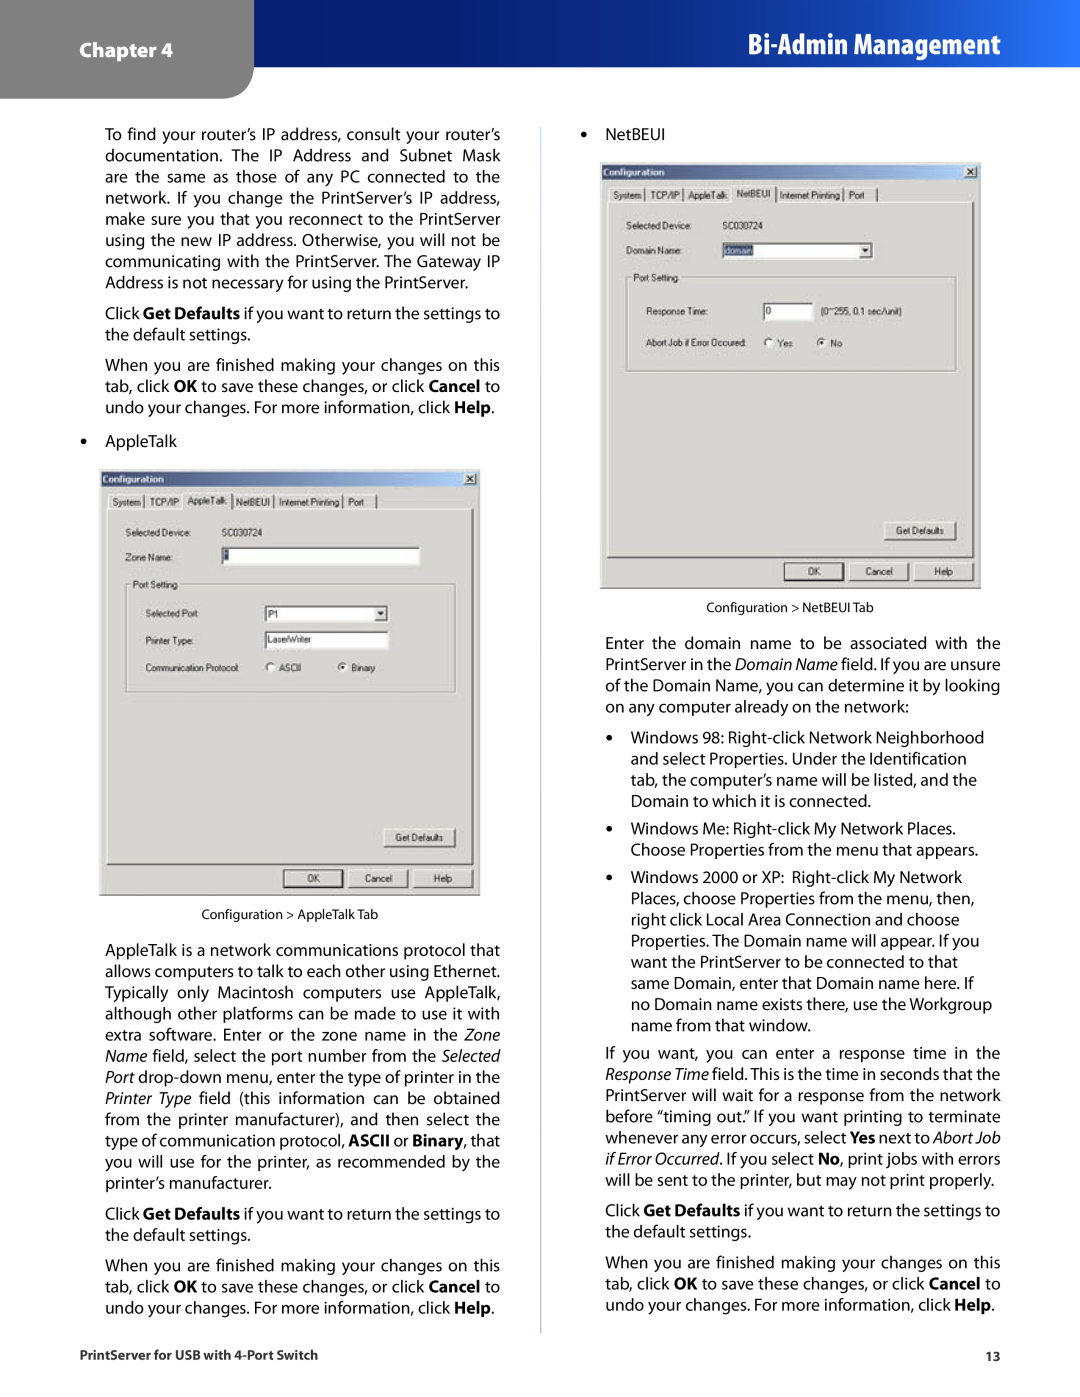 Cisco Systems PSUS4 manual Bi-Admin Management, Chapter, Configuration AppleTalk Tab, Configuration NetBEUI Tab 